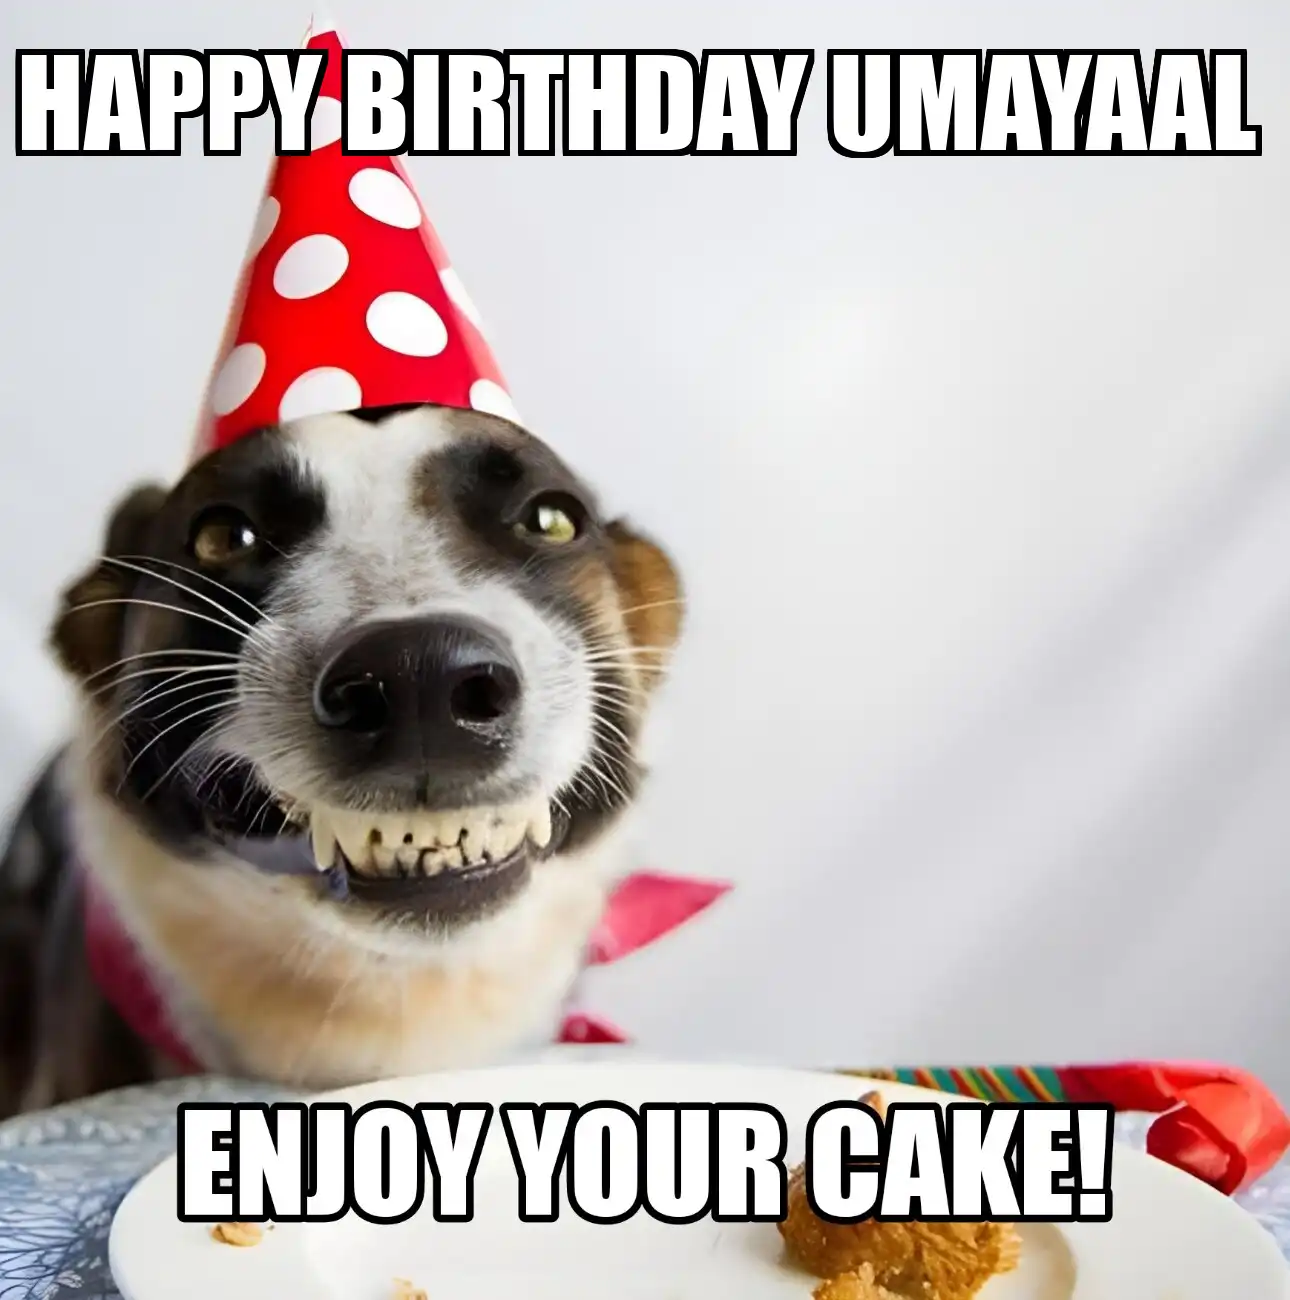 Happy Birthday Umayaal Enjoy Your Cake Dog Meme